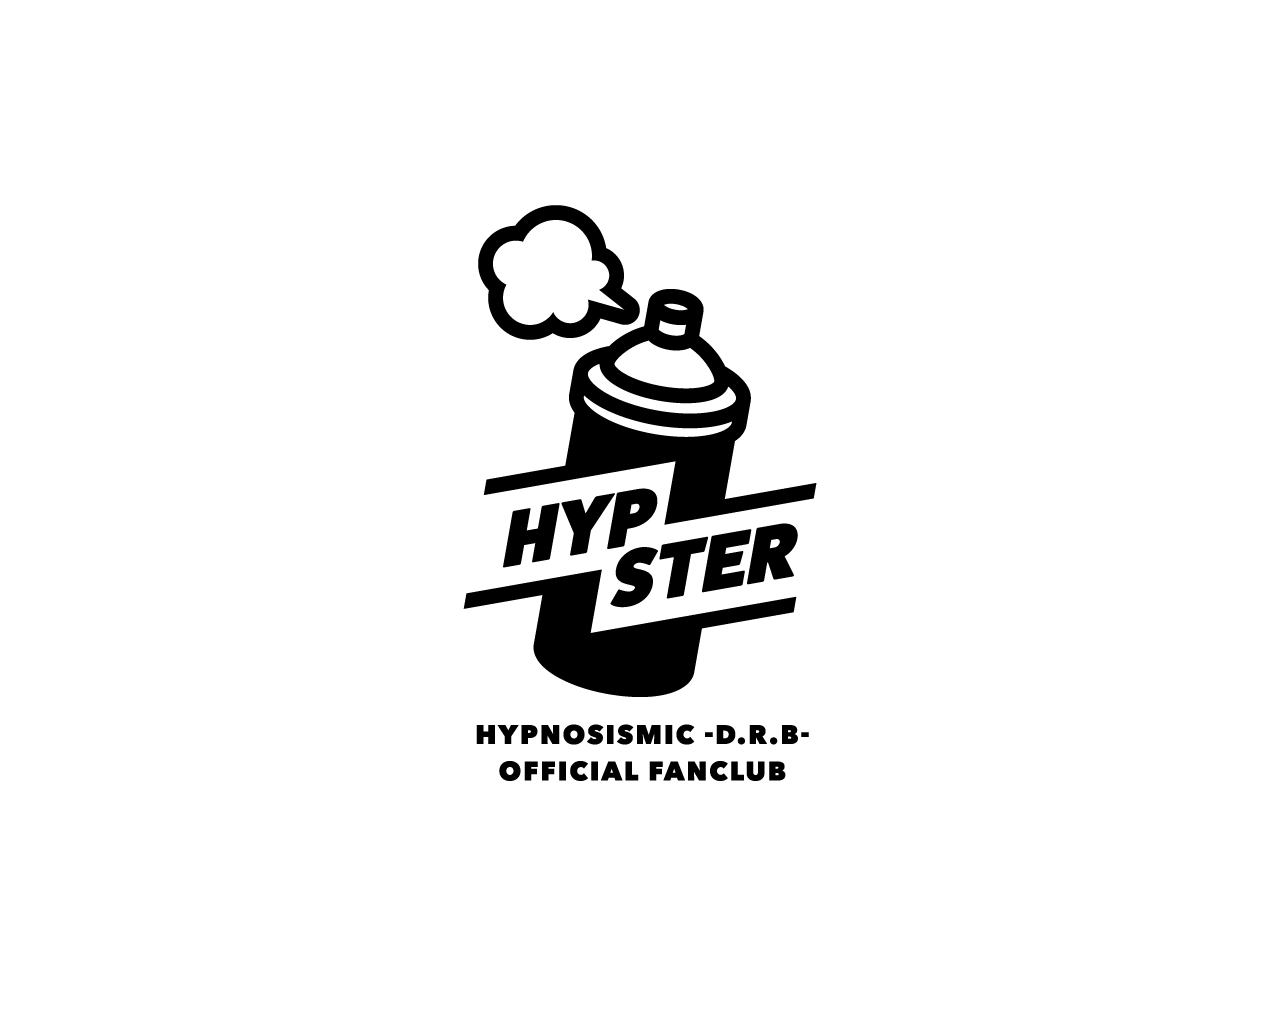 Balcolony ヒプノシスマイク Division Rap Battle Official Fanclub Hypsterのロゴデザインを担当しました Cl キングレコード株式会社 C King Record Co Ltd T Co Dpiyzp059z Twitter